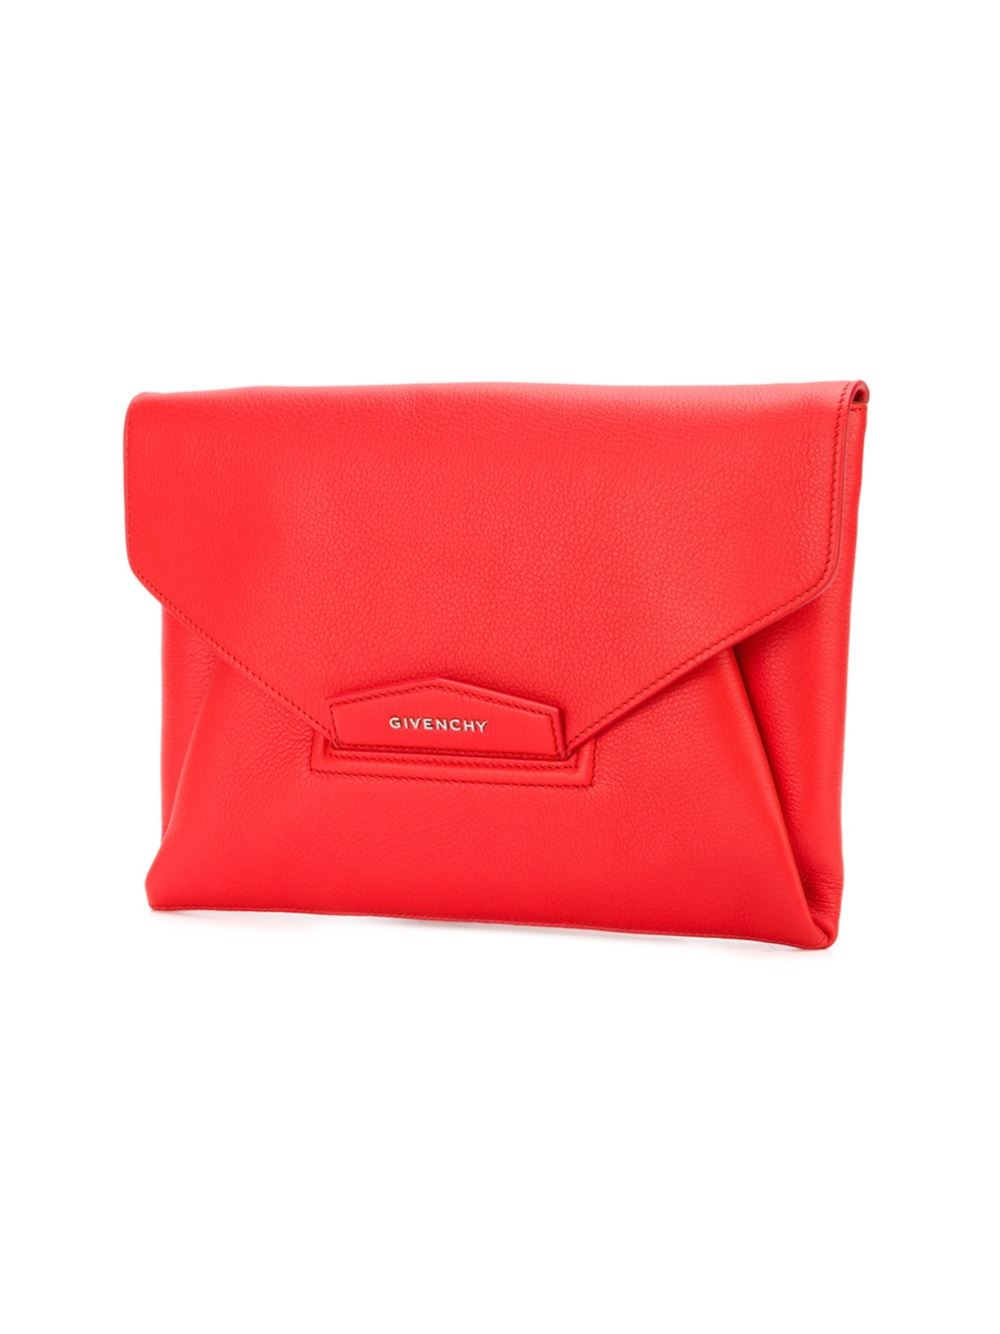 Givenchy Antigona Medium Leather Envelope Clutch Bag in Blue 